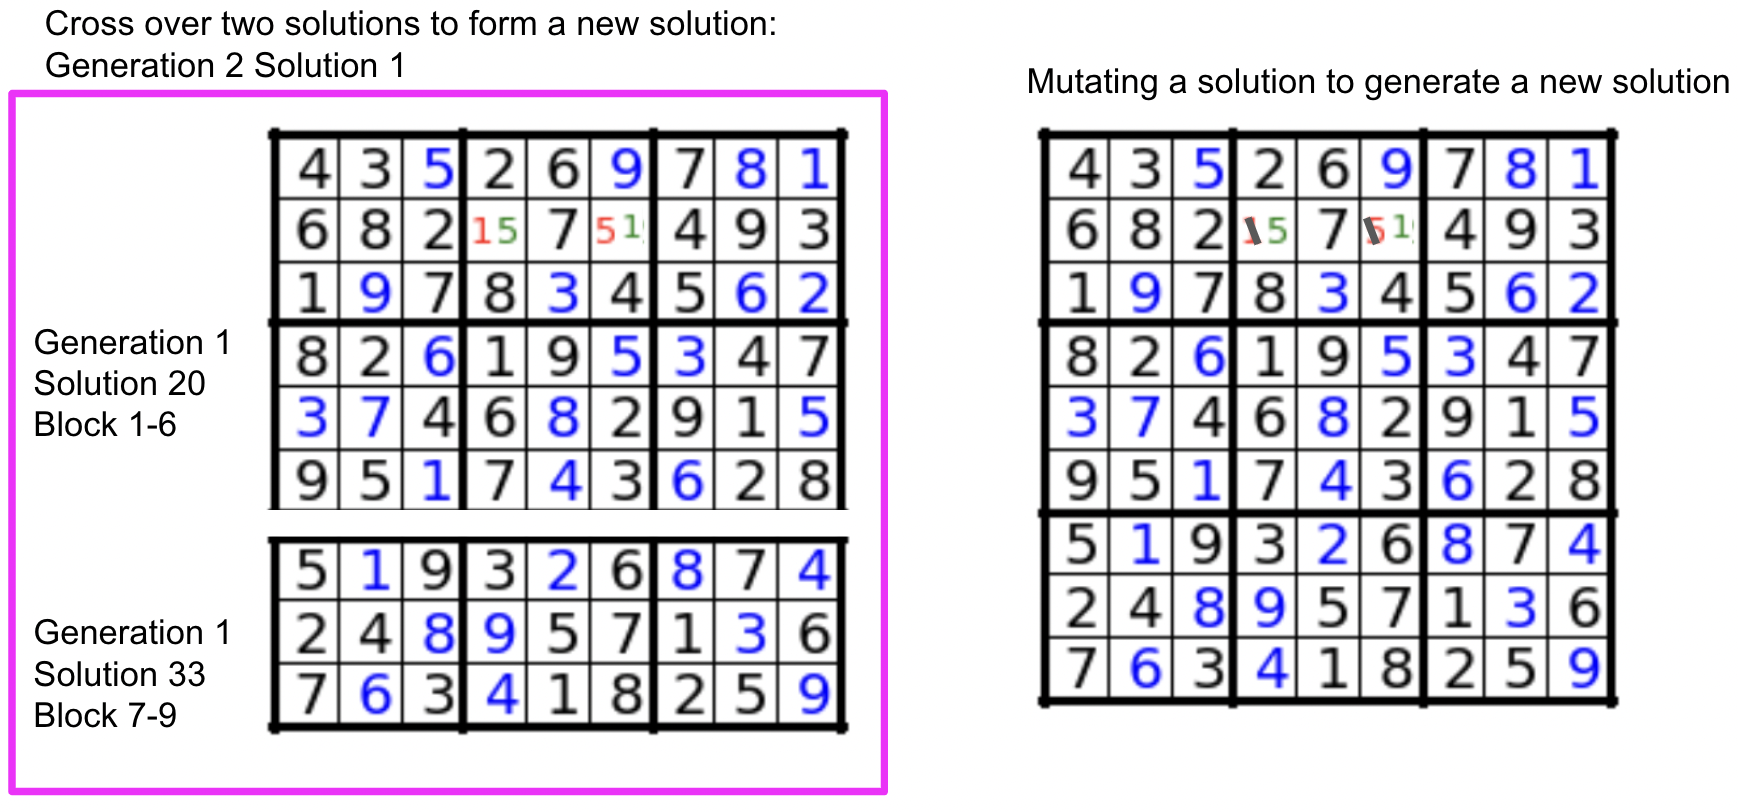 Sudoku 6 x 6 Level 2: Medium Vol. 1: Play Sudoku 6x6 Grid With Solutions  Medium Level Volumes 1-40 Sudoku Cross Sums Variation Travel Paper Logic  Games Solve Japanese Number Puzzles Enjoy